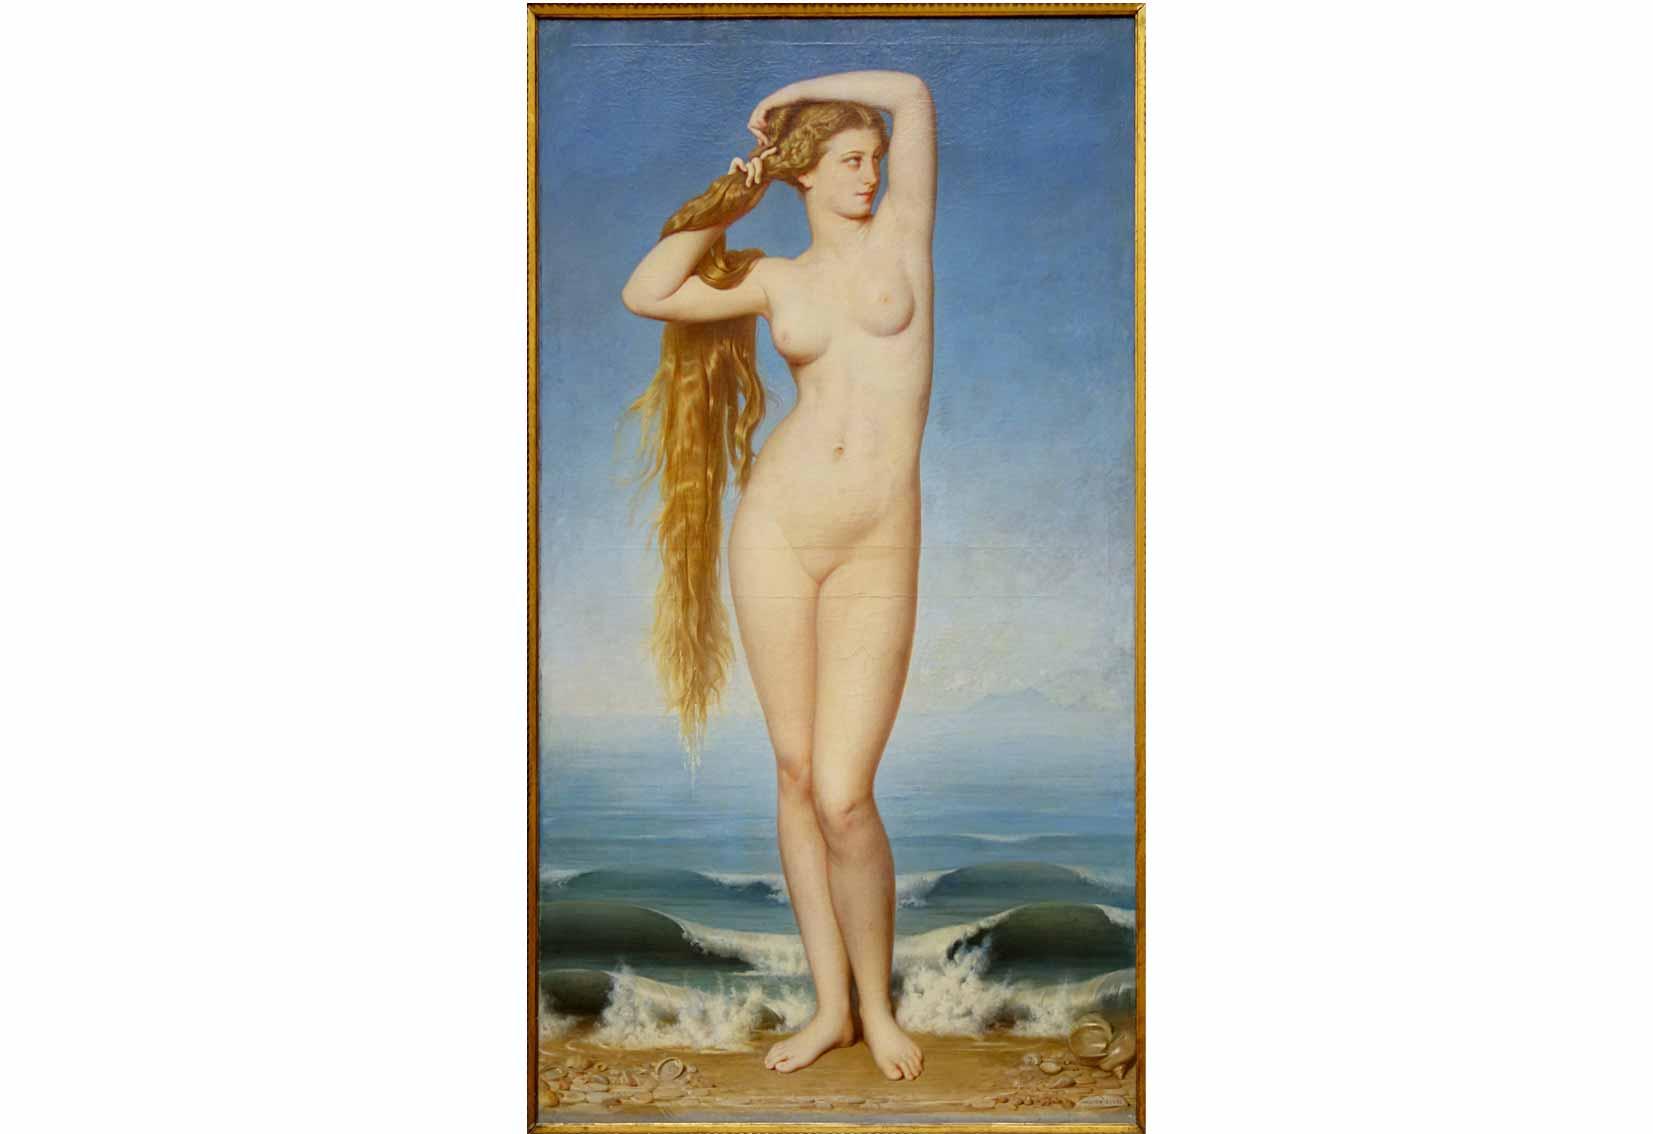 Eugène Emmanuel Amaury Pineux Duval, The Birth of Venus, 1862.